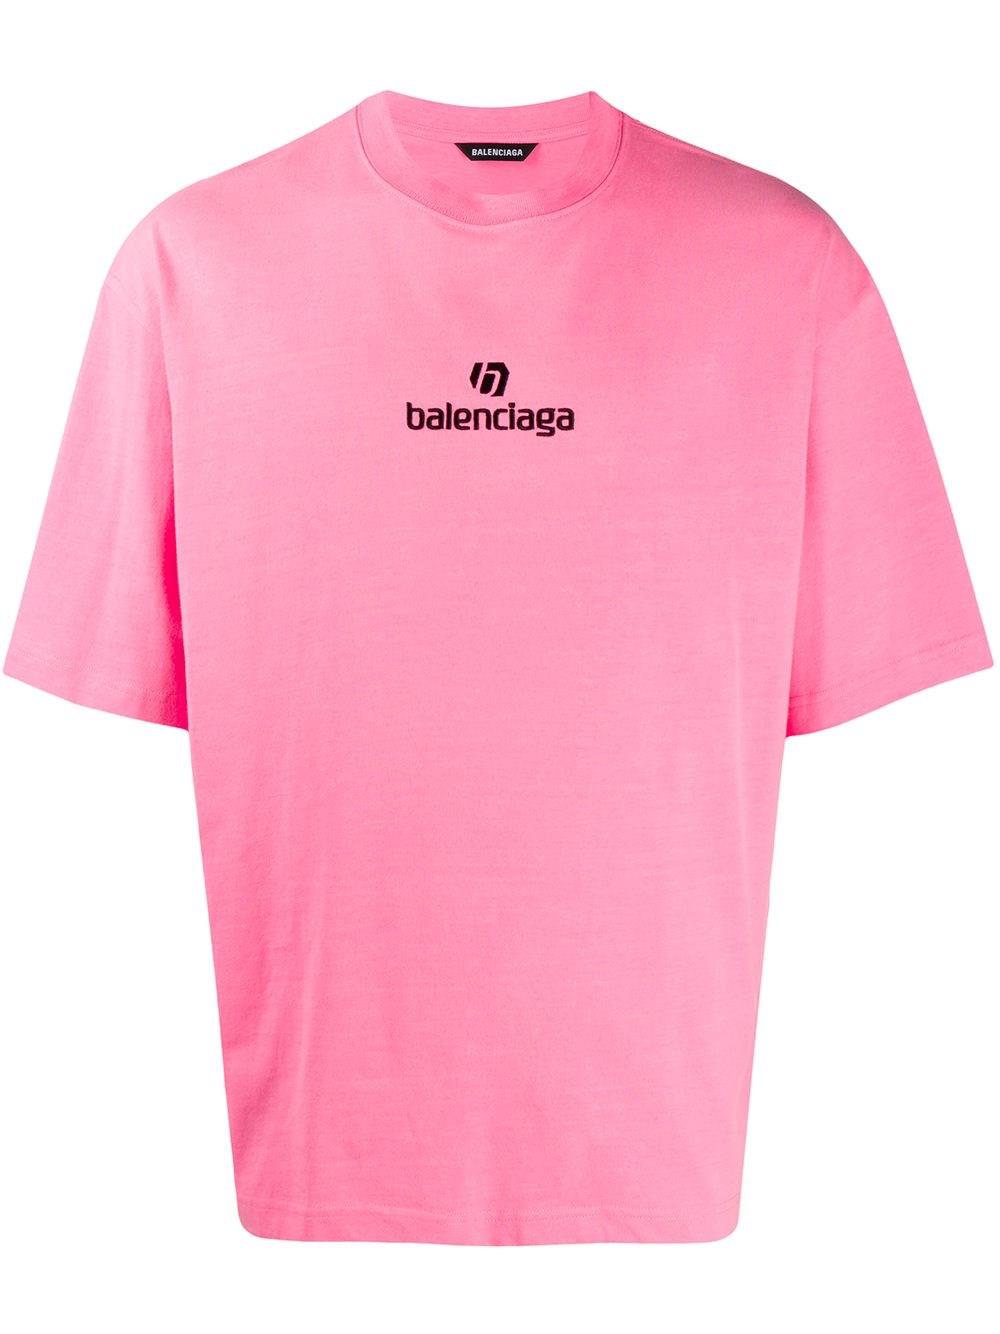 Balenciaga Sponsor T-shirt Pink for Men Lyst